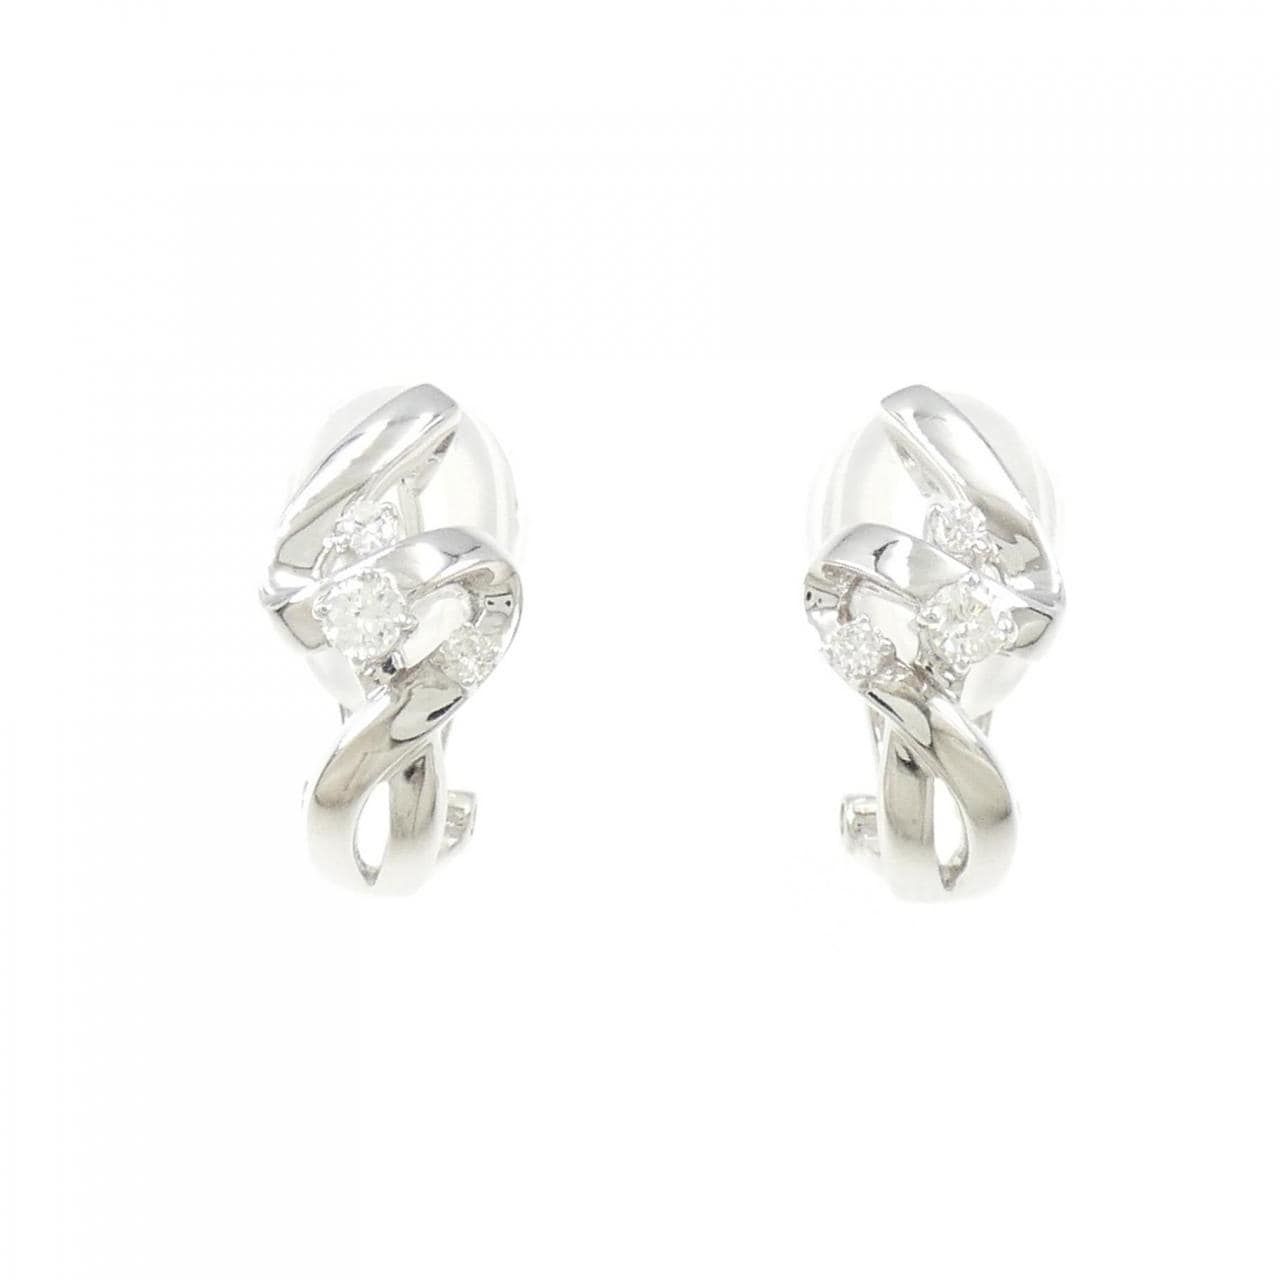 750WG Diamond earrings 0.24CT